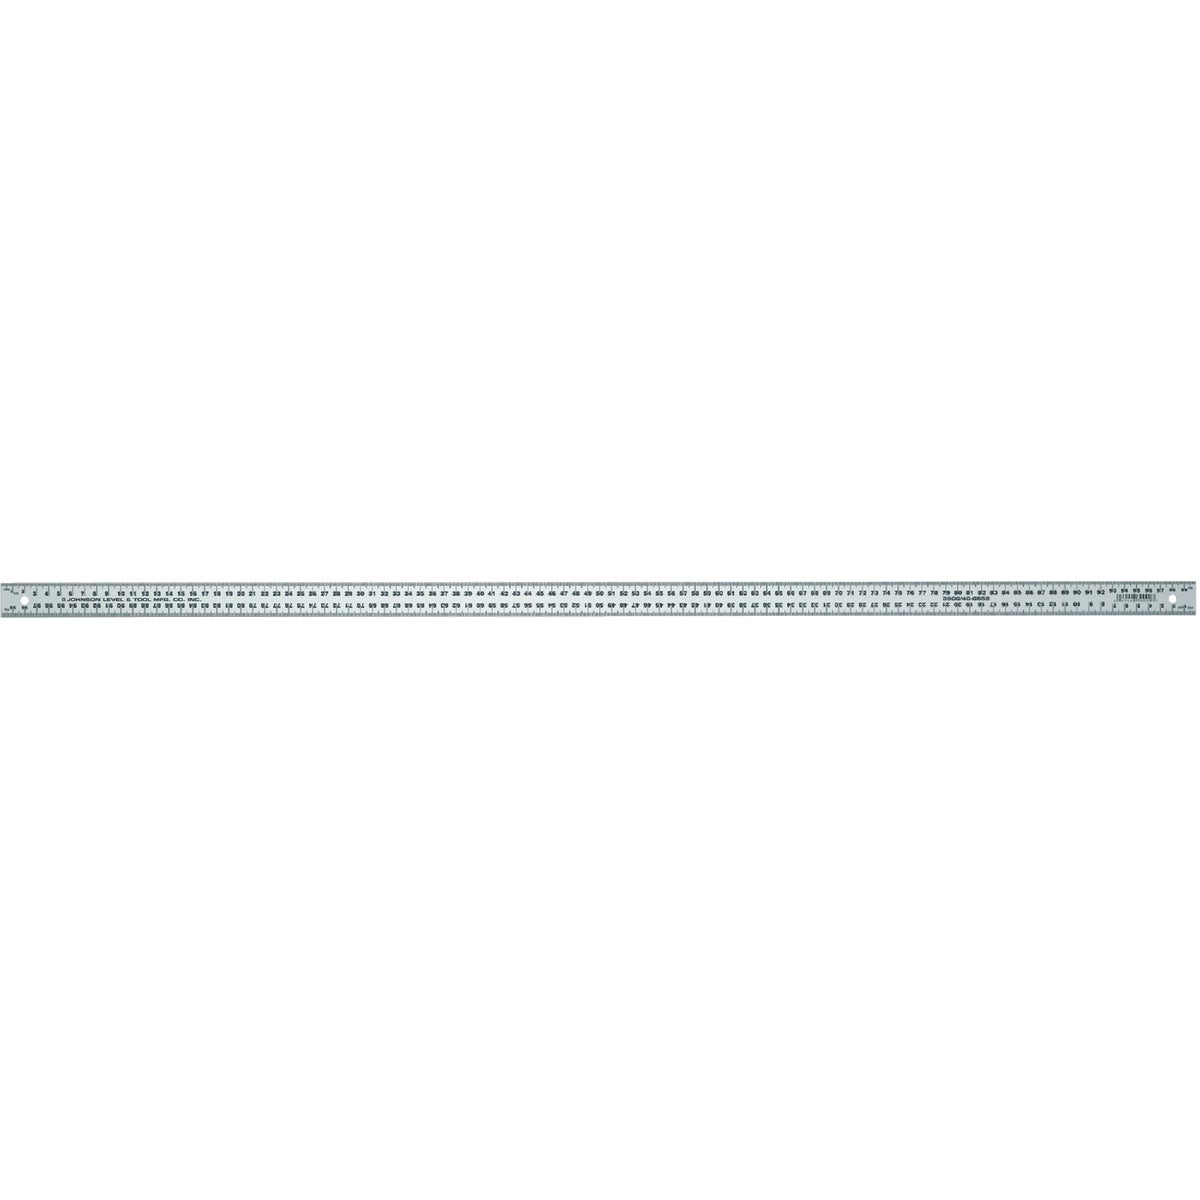 Johnson Level 36 In. Aluminum Metric Meterstick Straight Edge Ruler